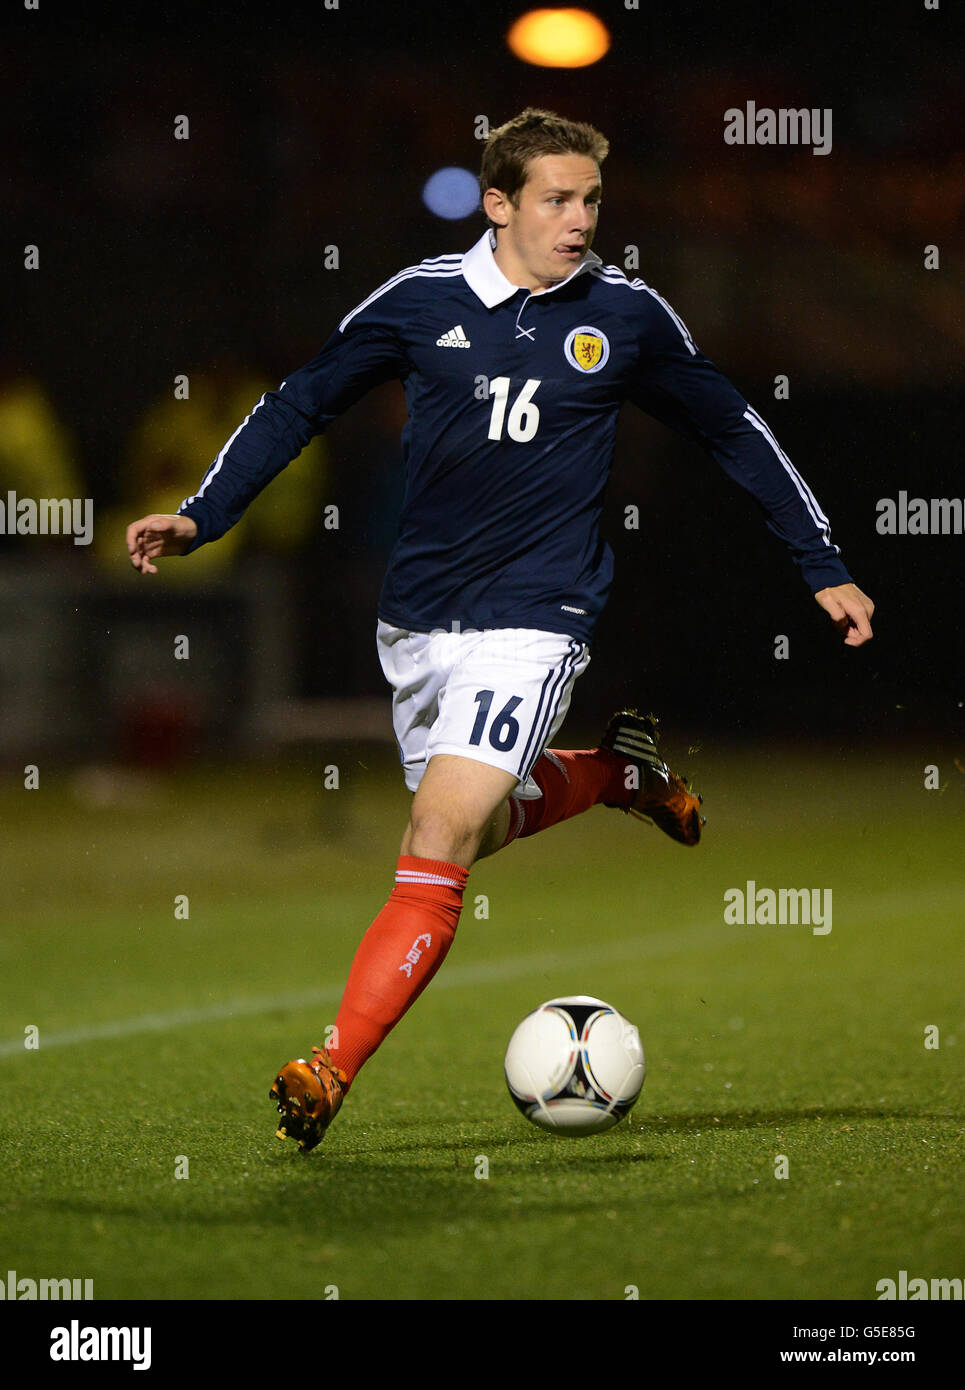 Calcio - Campionato europeo Under 21 UEFA 2013 - Gruppo Ten - Scozia / Lussemburgo - Saint Mirren Park. Peter Pawlett in Scozia Foto Stock